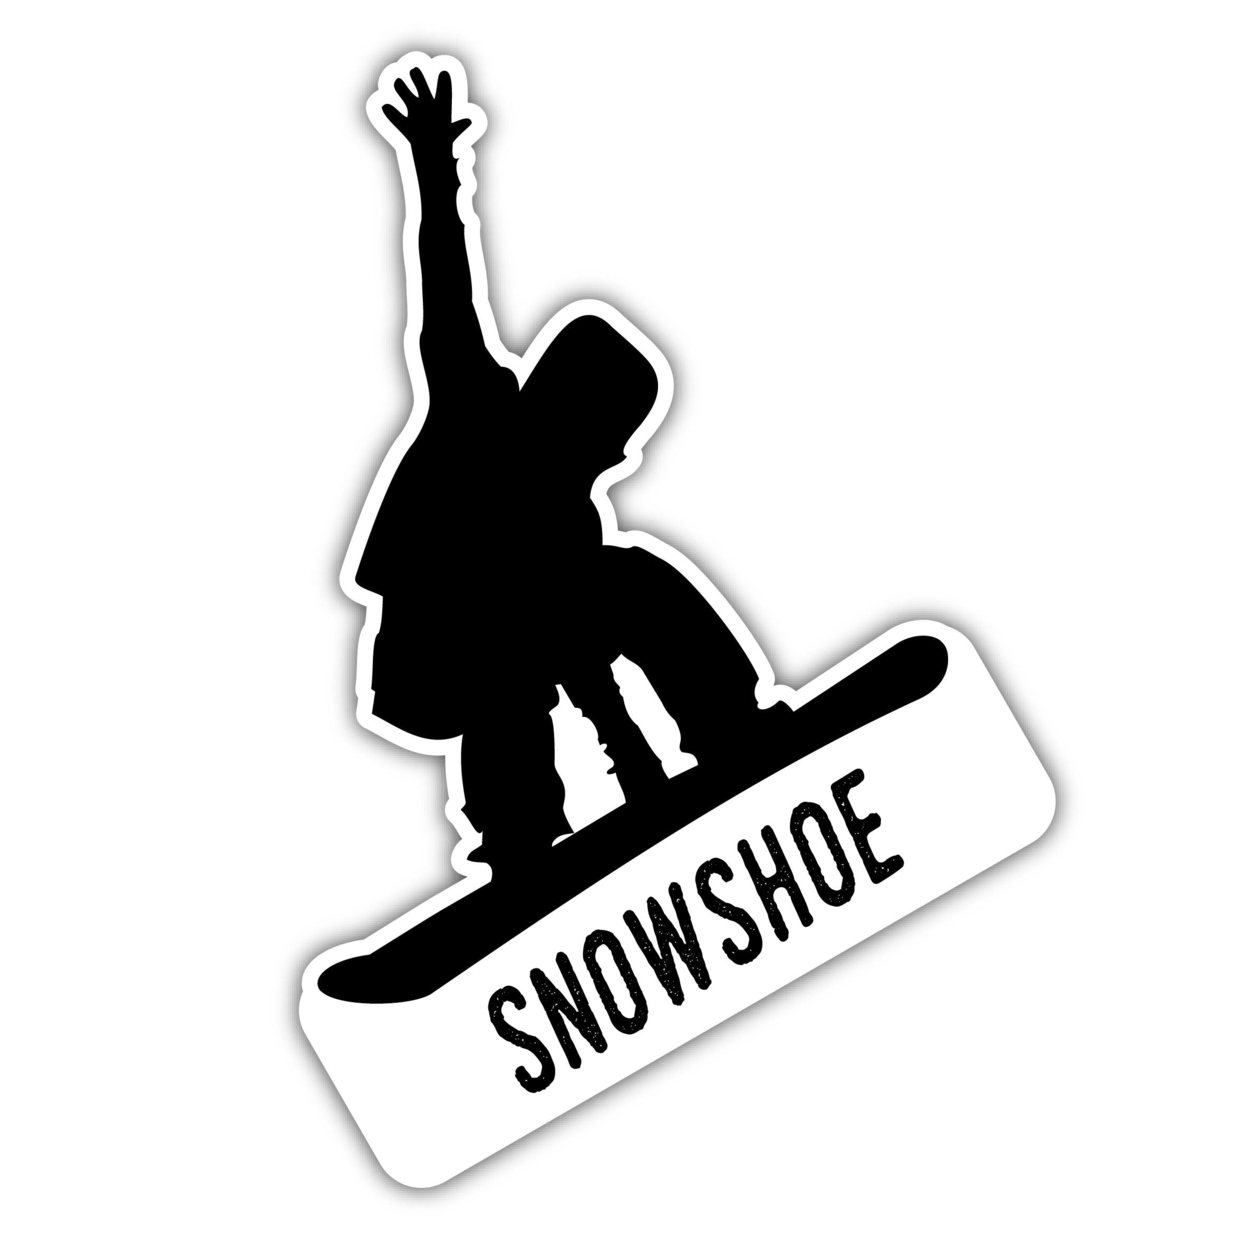 Snowshoe West Virginia Ski Adventures Souvenir Approximately 5 X 2.5-Inch Vinyl Decal Sticker Goggle Design